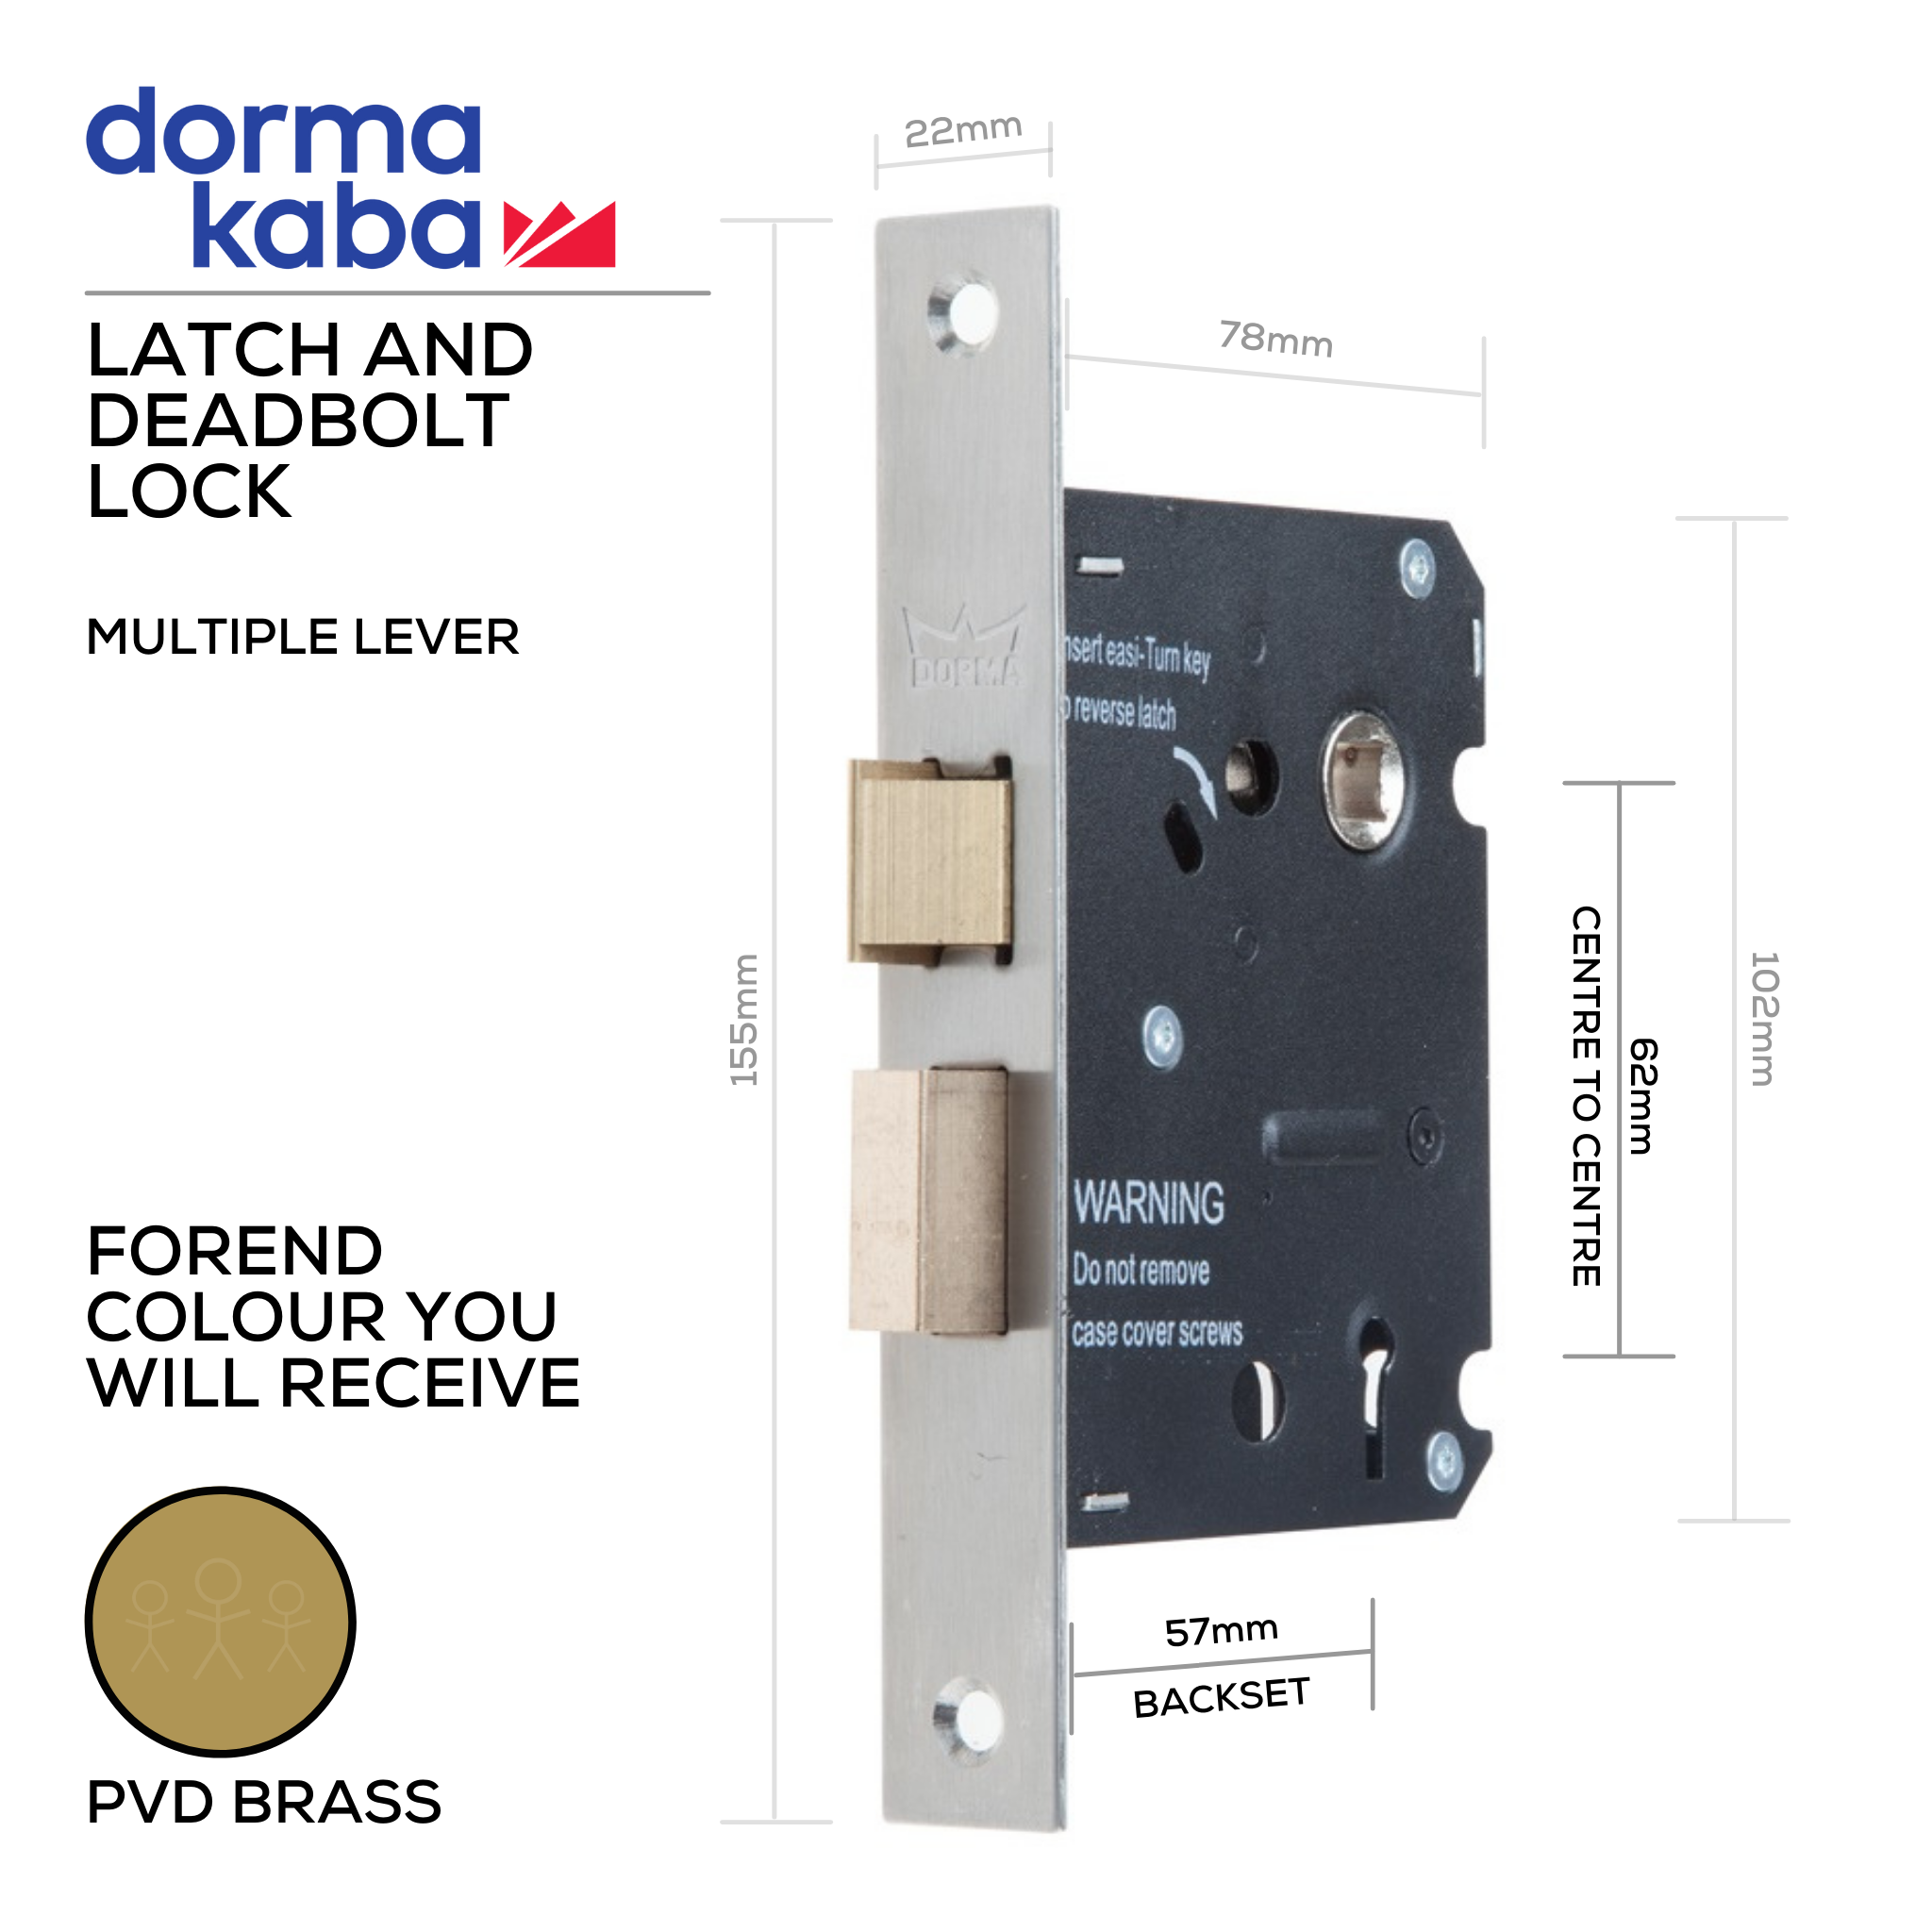 D034S PVD Brass, Multiple Lever, Latch & Deadbolt Lock, Euro Cylinder, Excluding Cylinder, 57mm (Backset) x 62mm (ctc), PVD Brass, DORMAKABA